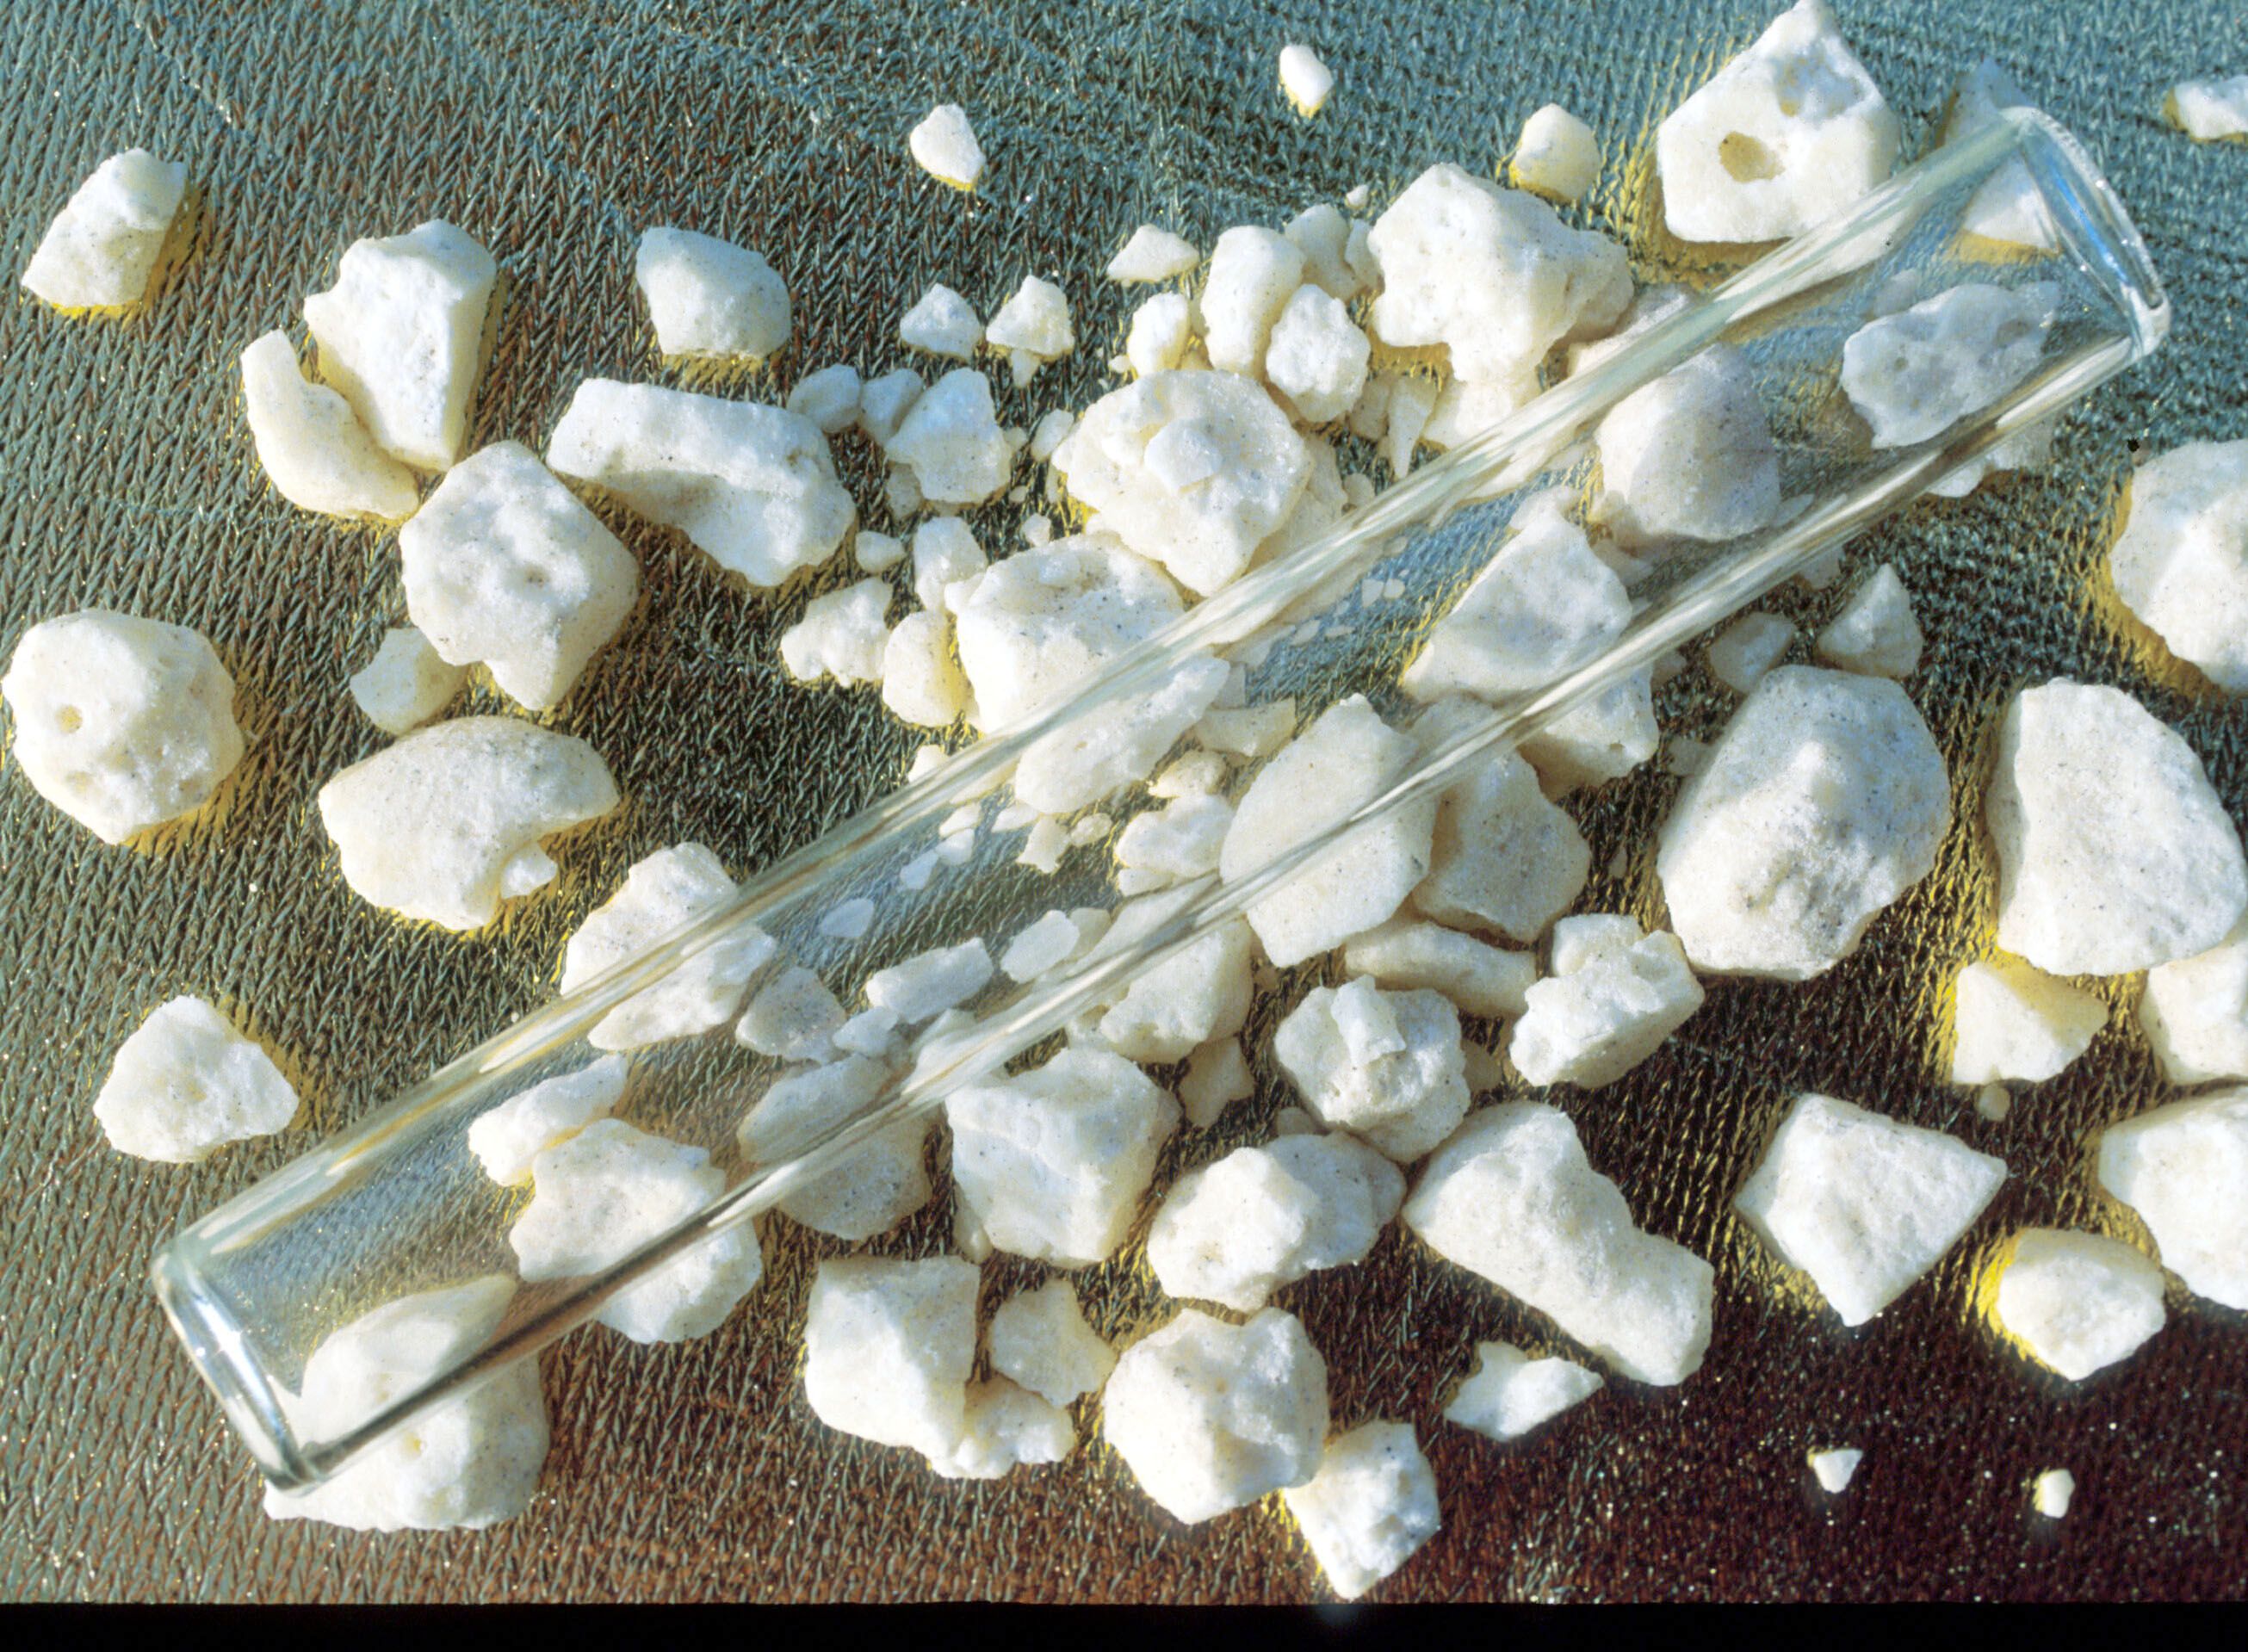 Cocaine images